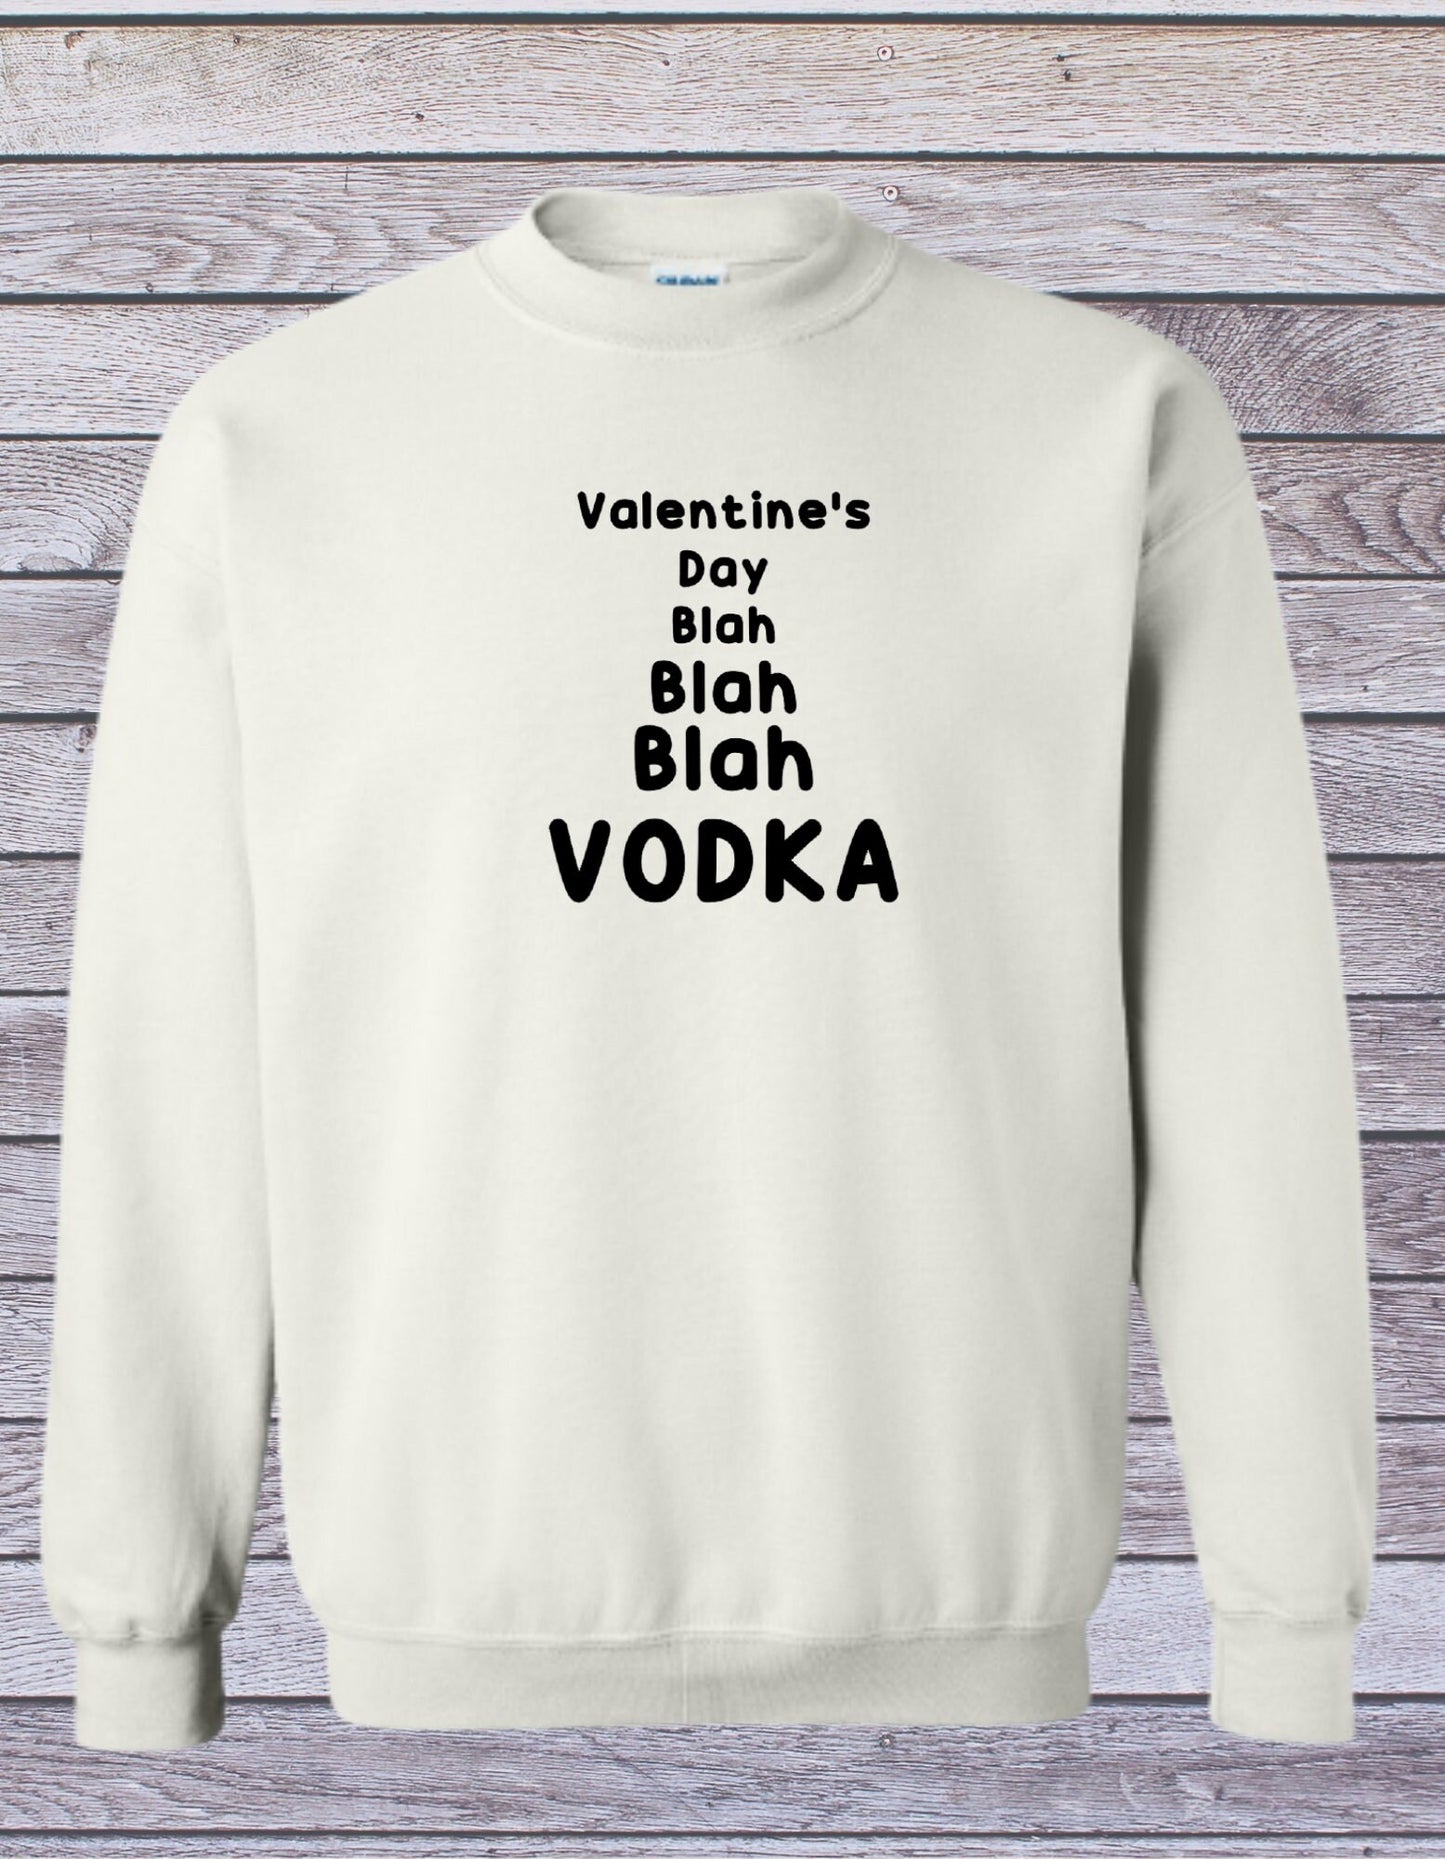 Valentine's Day Blah Blah Blah VODKA! Single on Sweetheart day t-shirt hoodie sweatshirt funny Valentine best seller most popular